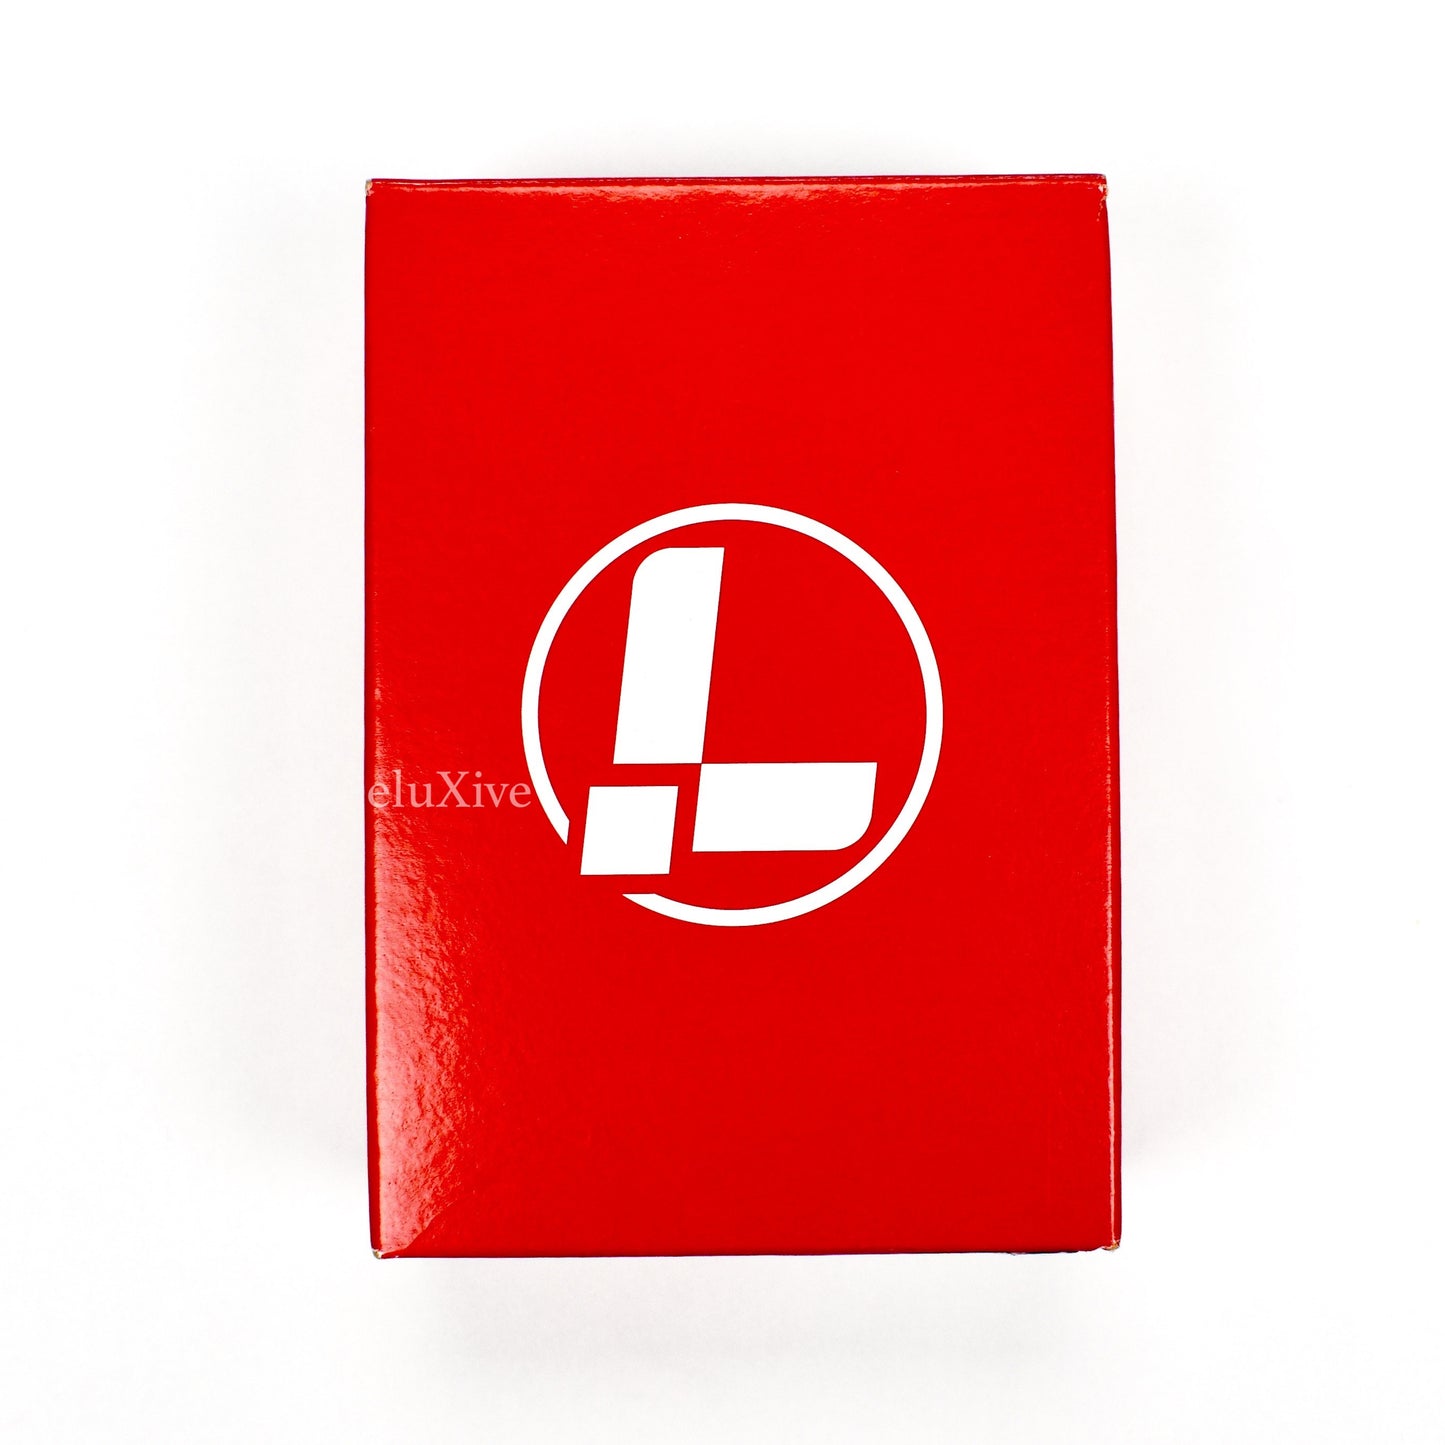 Supreme - Red Box Logo Leatherman Tool